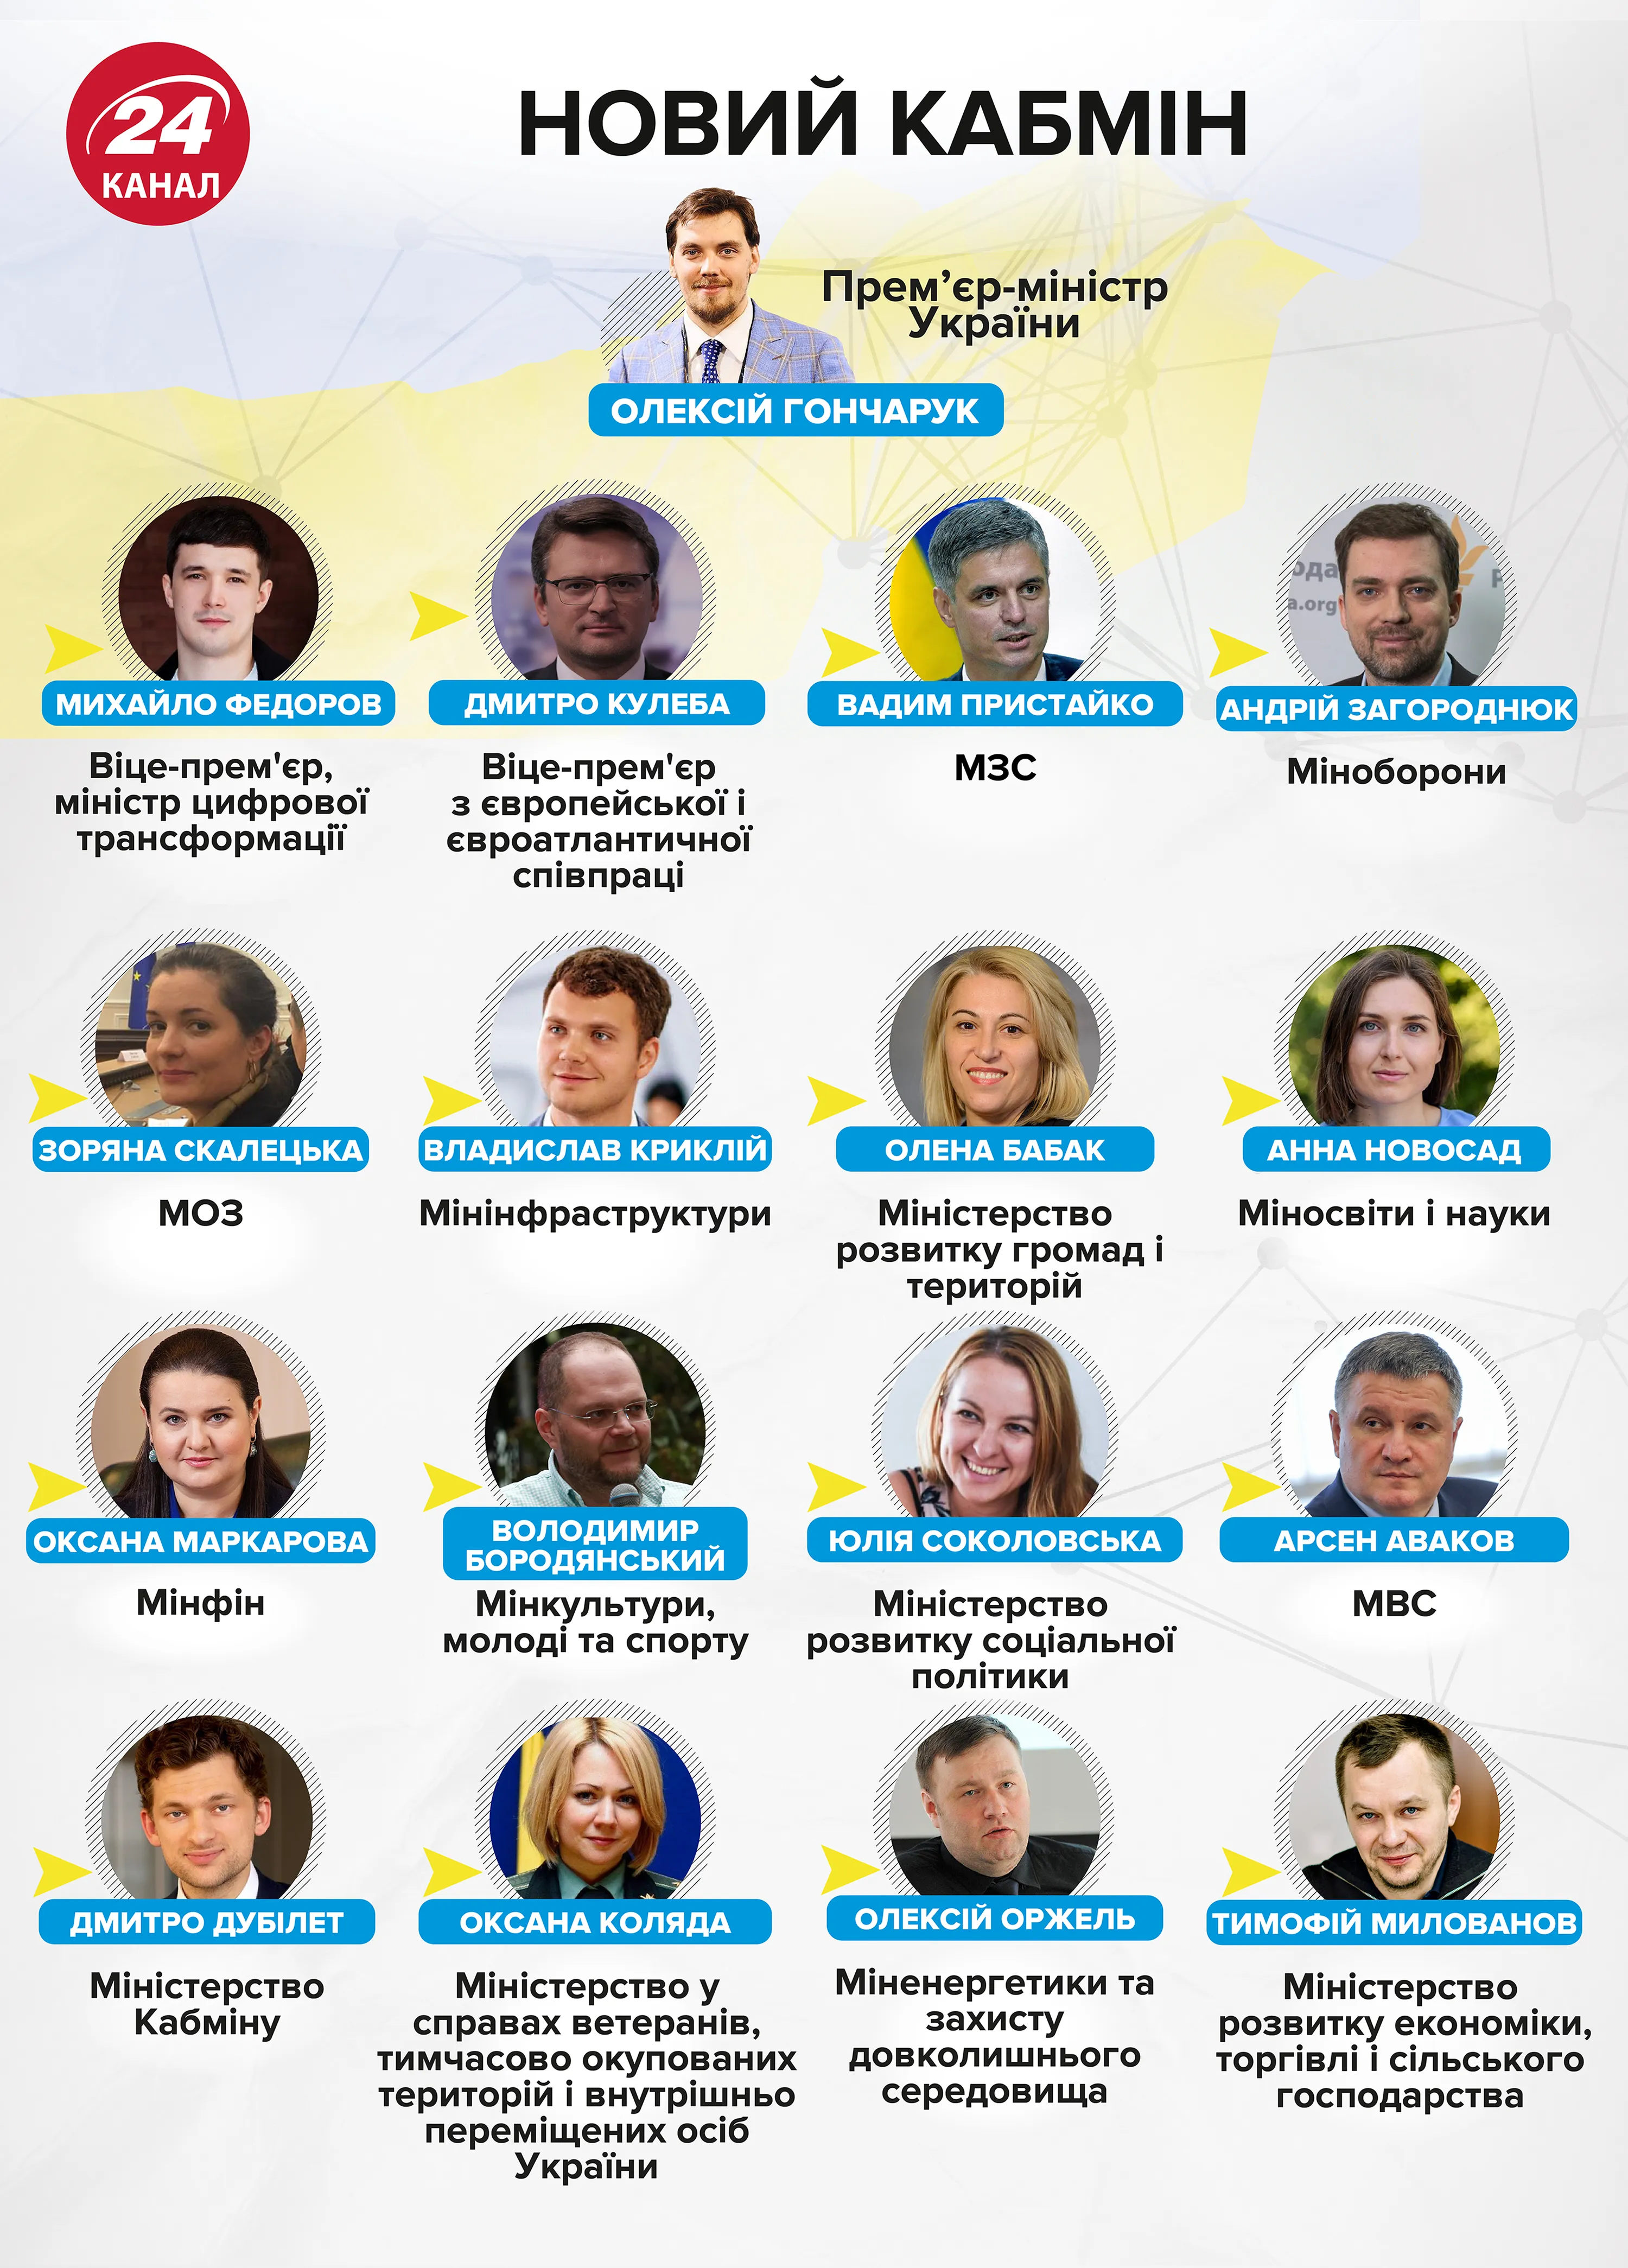 Кабінет міністрів премєр Гончарук інфографіка